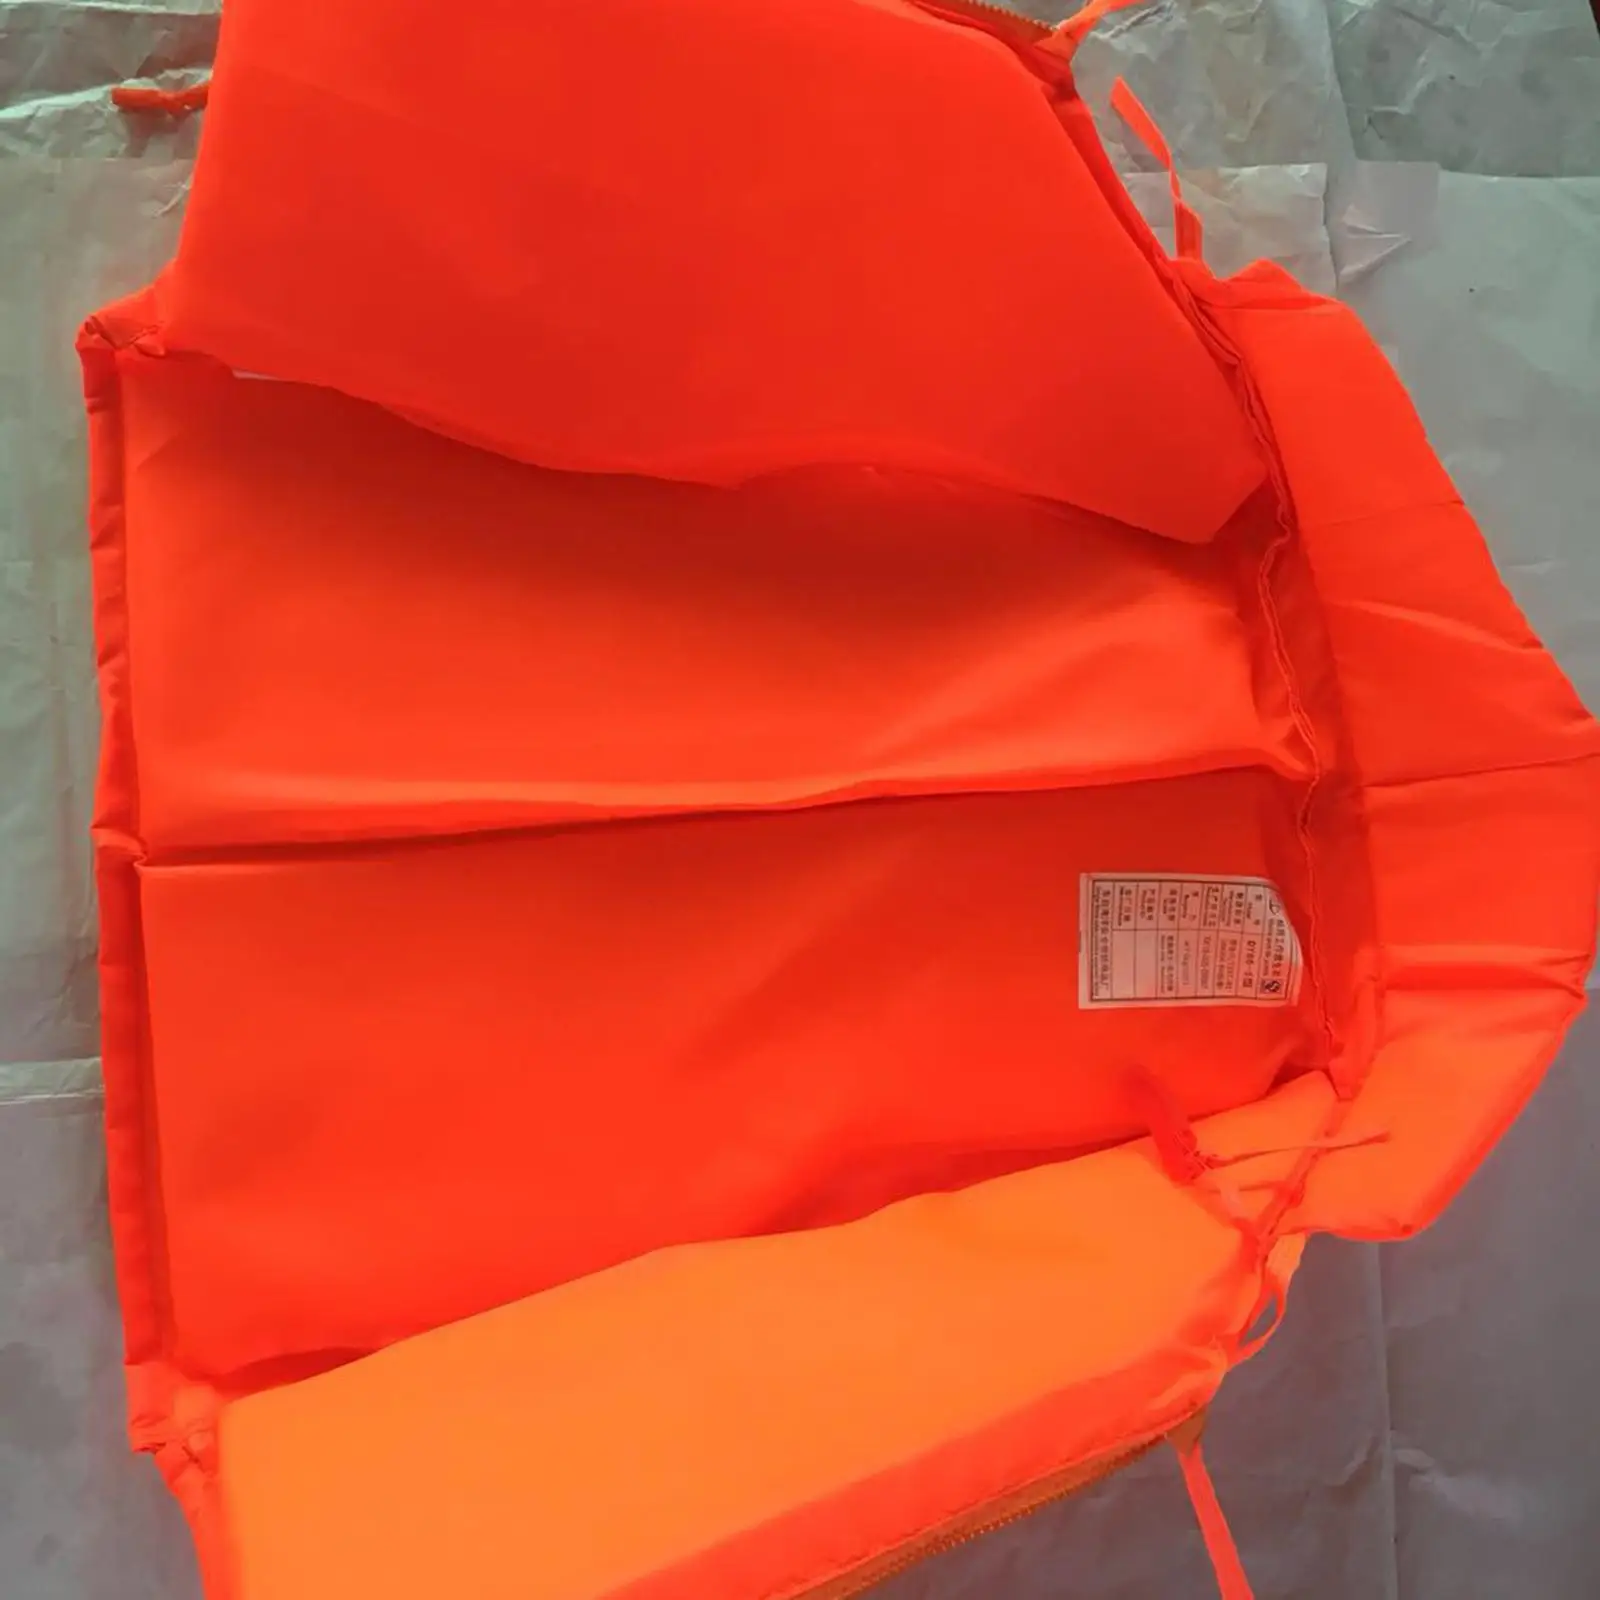 Adult Life Vest Fly Fishing Jacket Outdoor Life Jacket for Kayak Sailing Ski